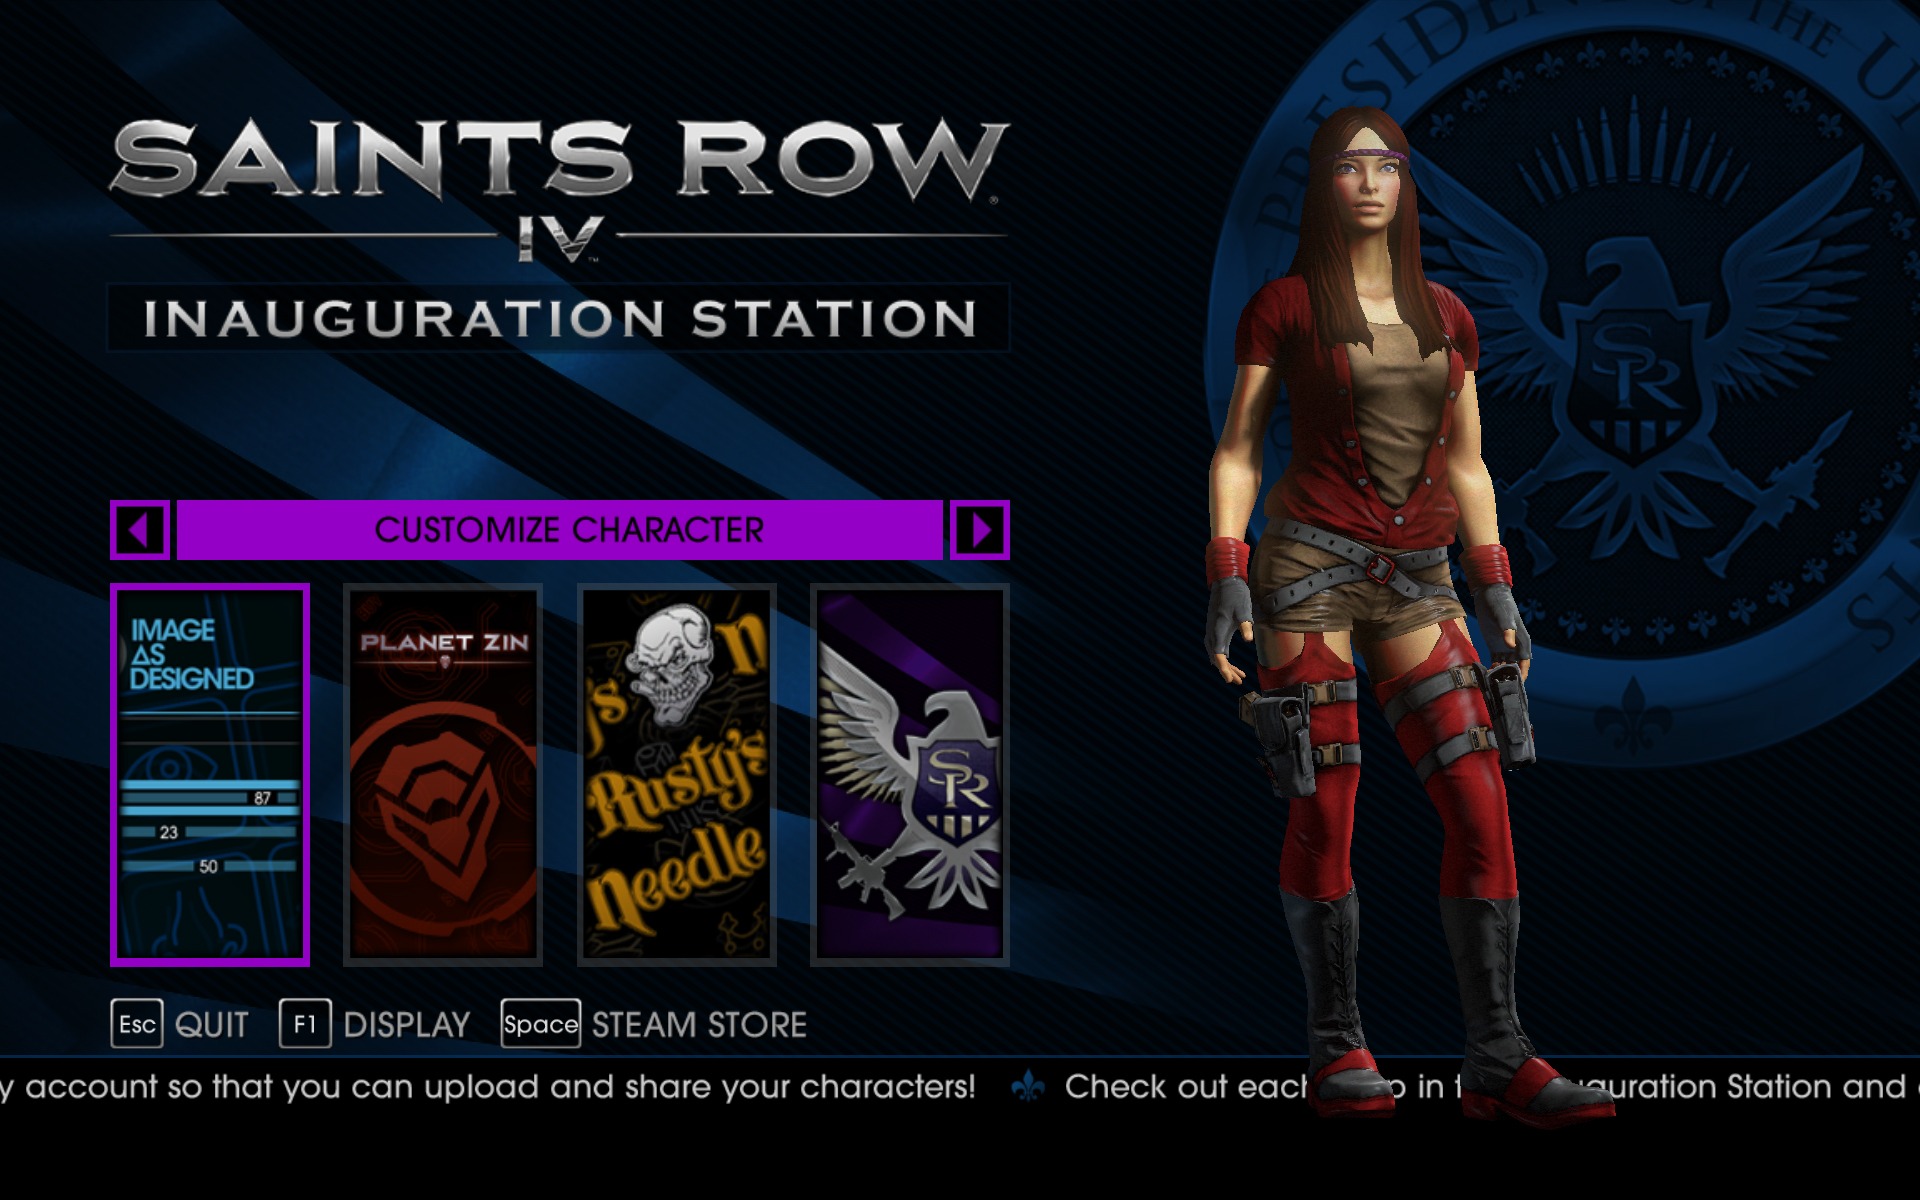 Saints Row IV: Inauguration Station screenshot